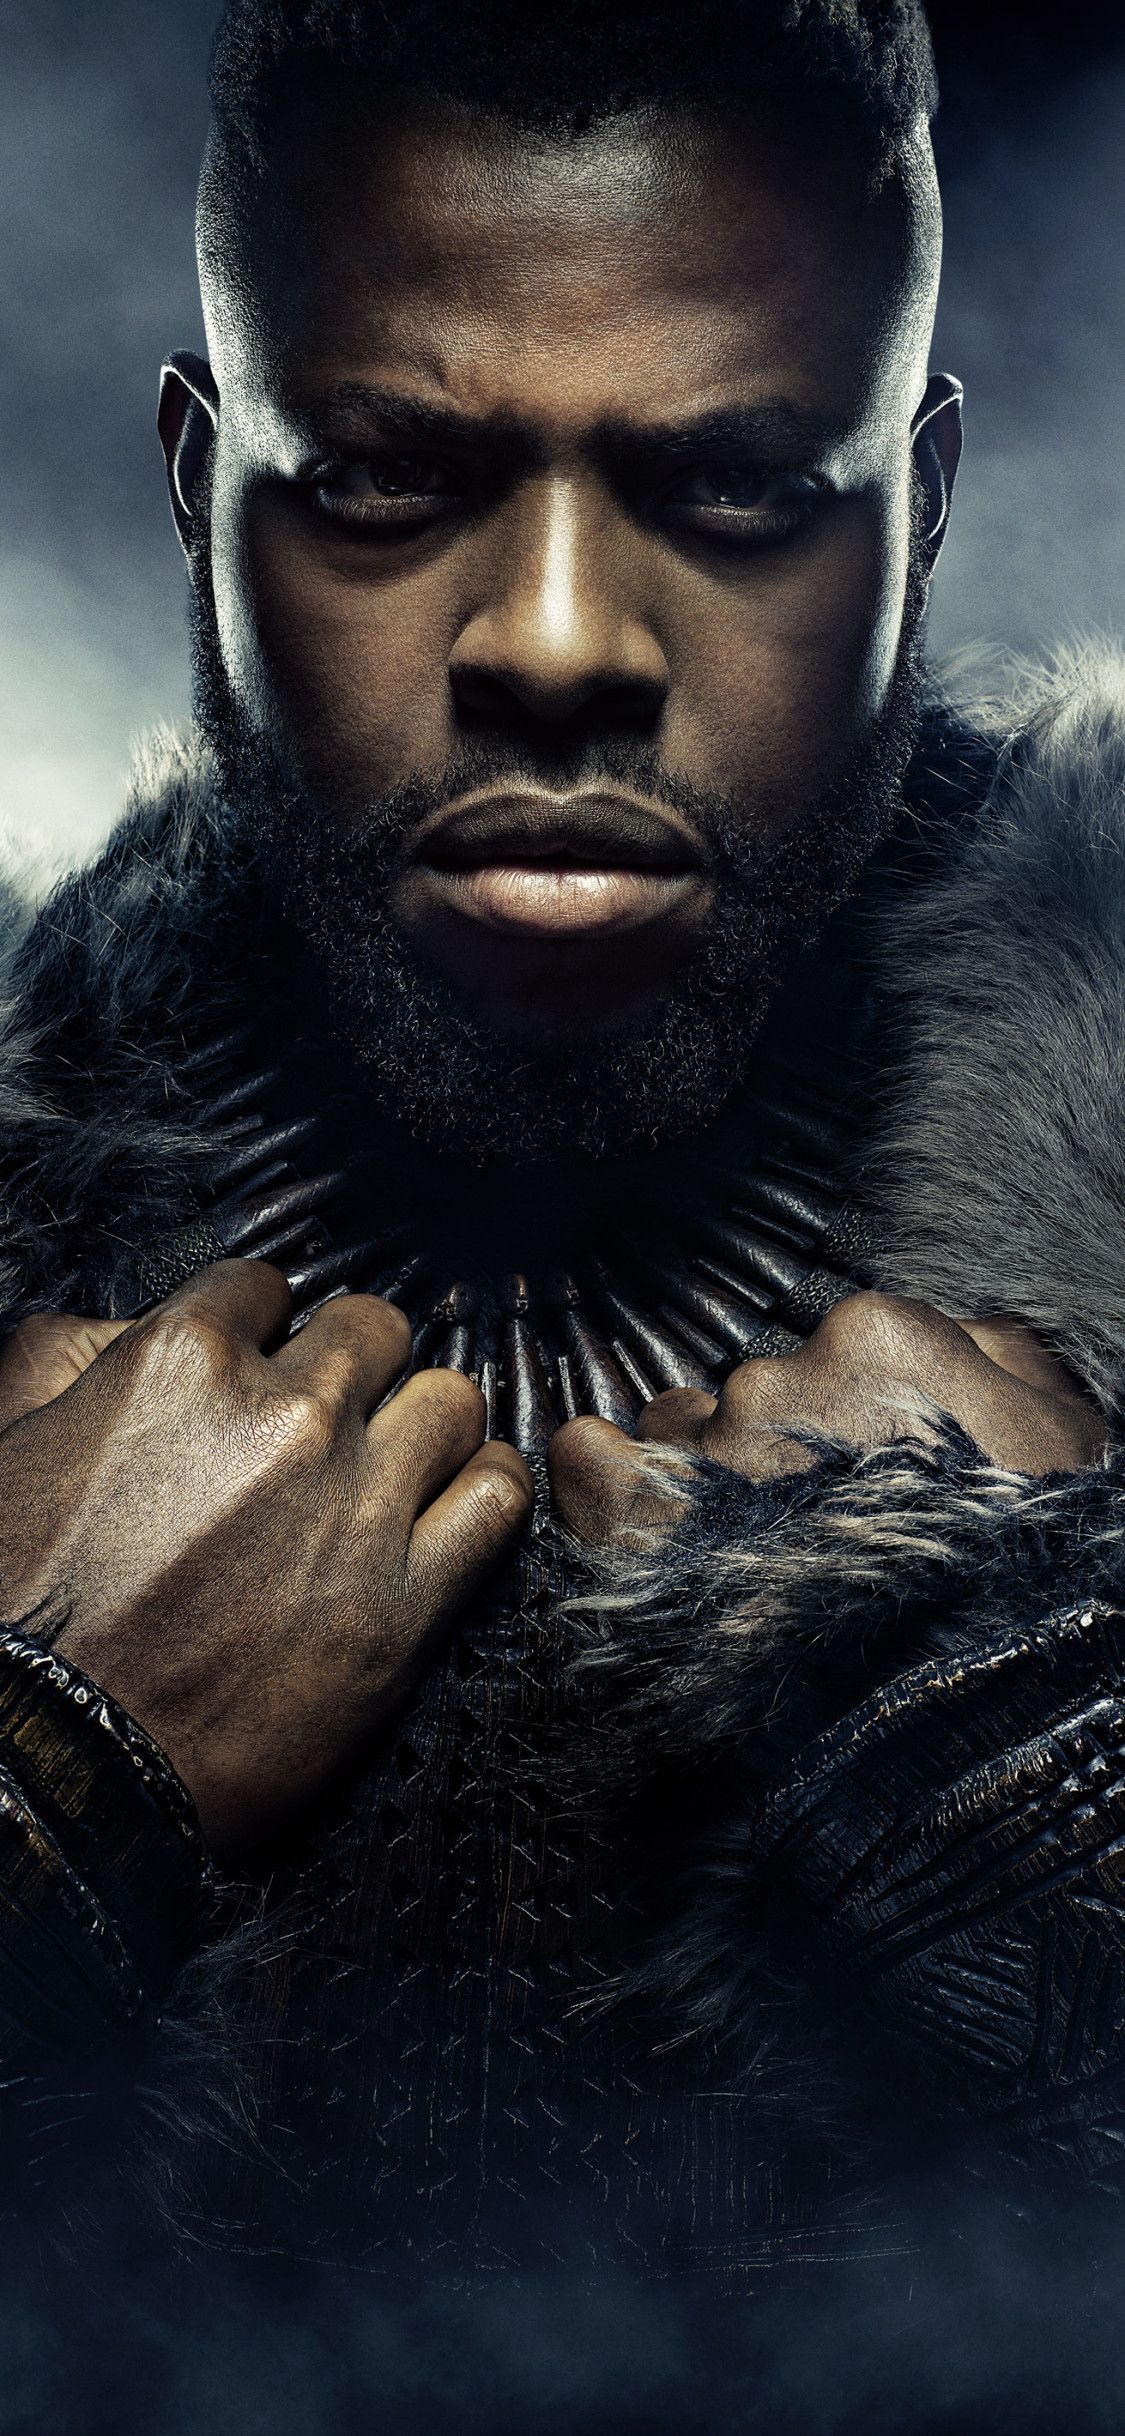 Black Panther Winston Duke As Mbaku 5k iPhone XS, iPhone